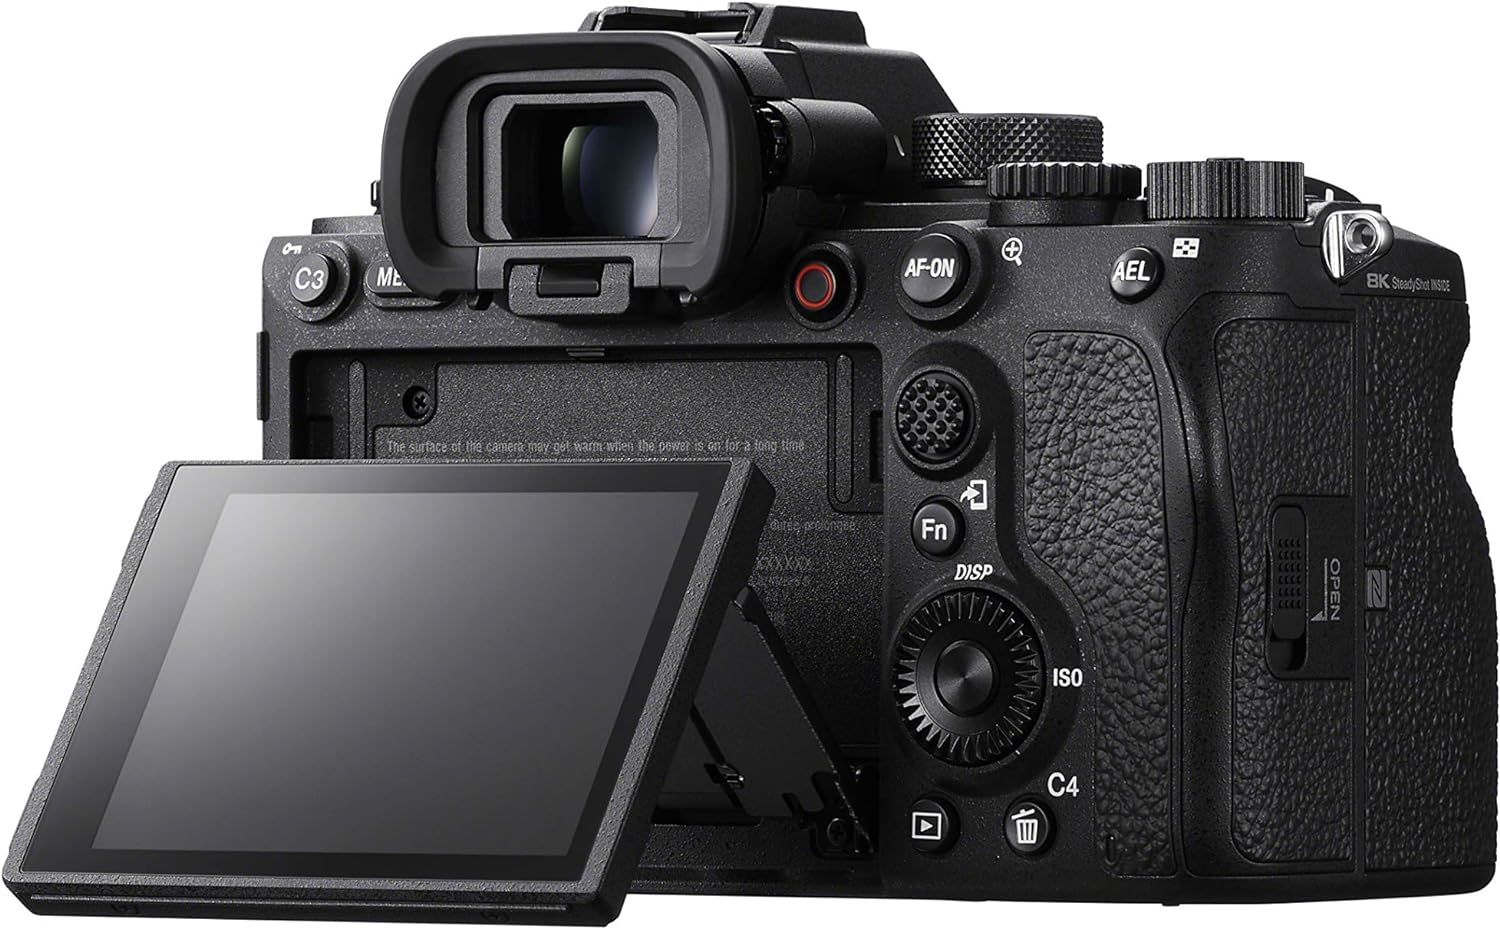 Sony Alpha 1 Full-frame Interchangeable Lens Mirrorless Camera